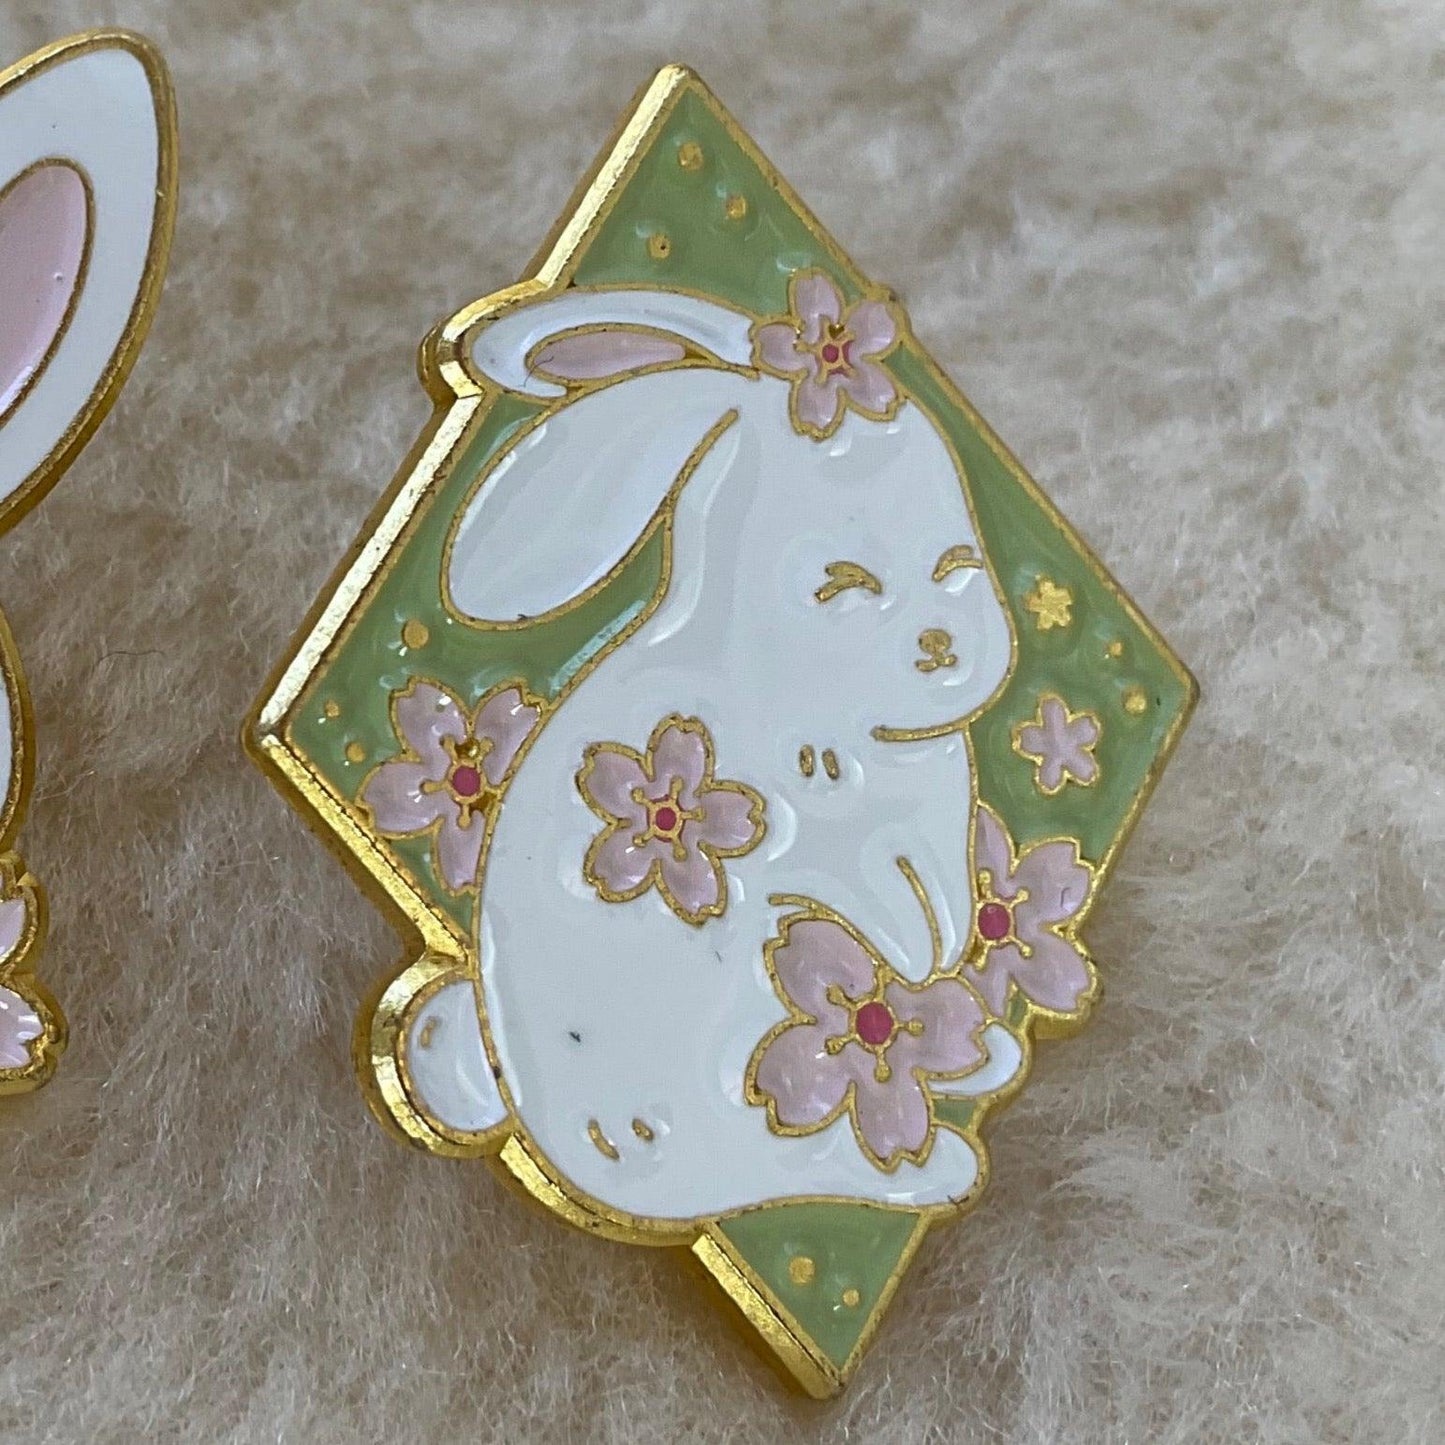 Flower Assorted Bunny Rabbit Pin Badge - 4 Styles